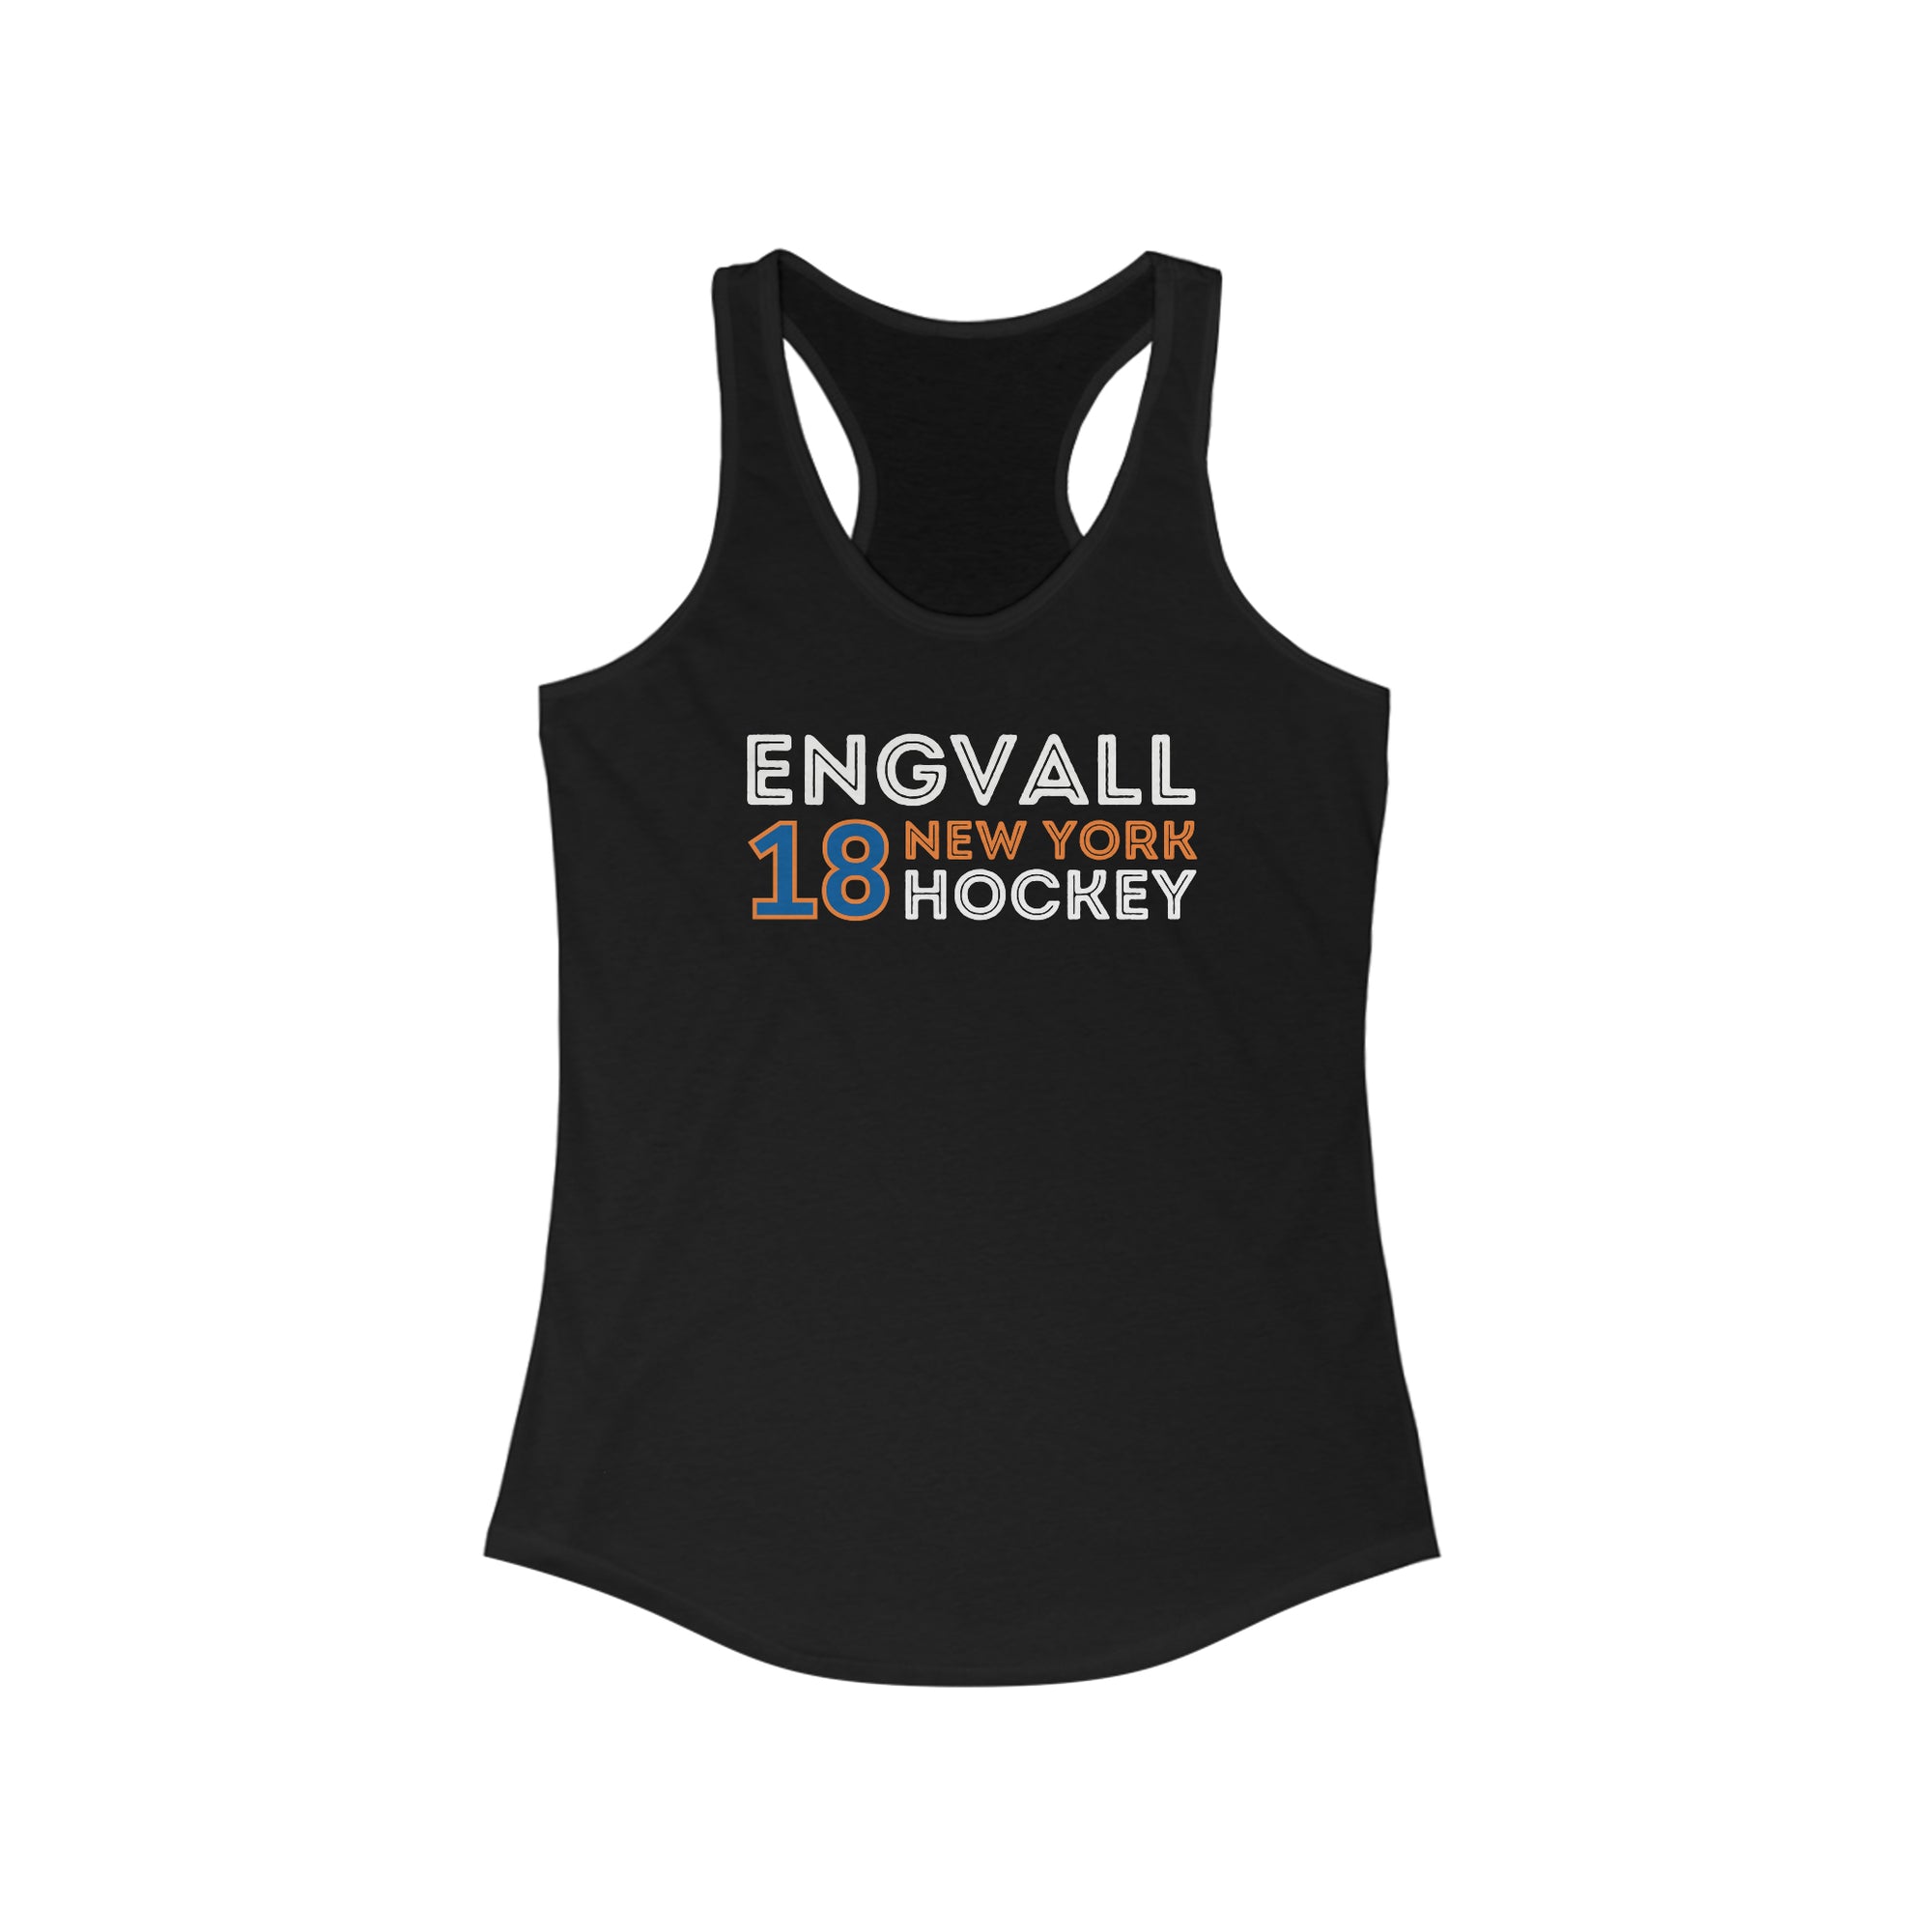 Engvall 18 New York Hockey Grafitti Wall Design Women's Ideal Racerback Tank Top